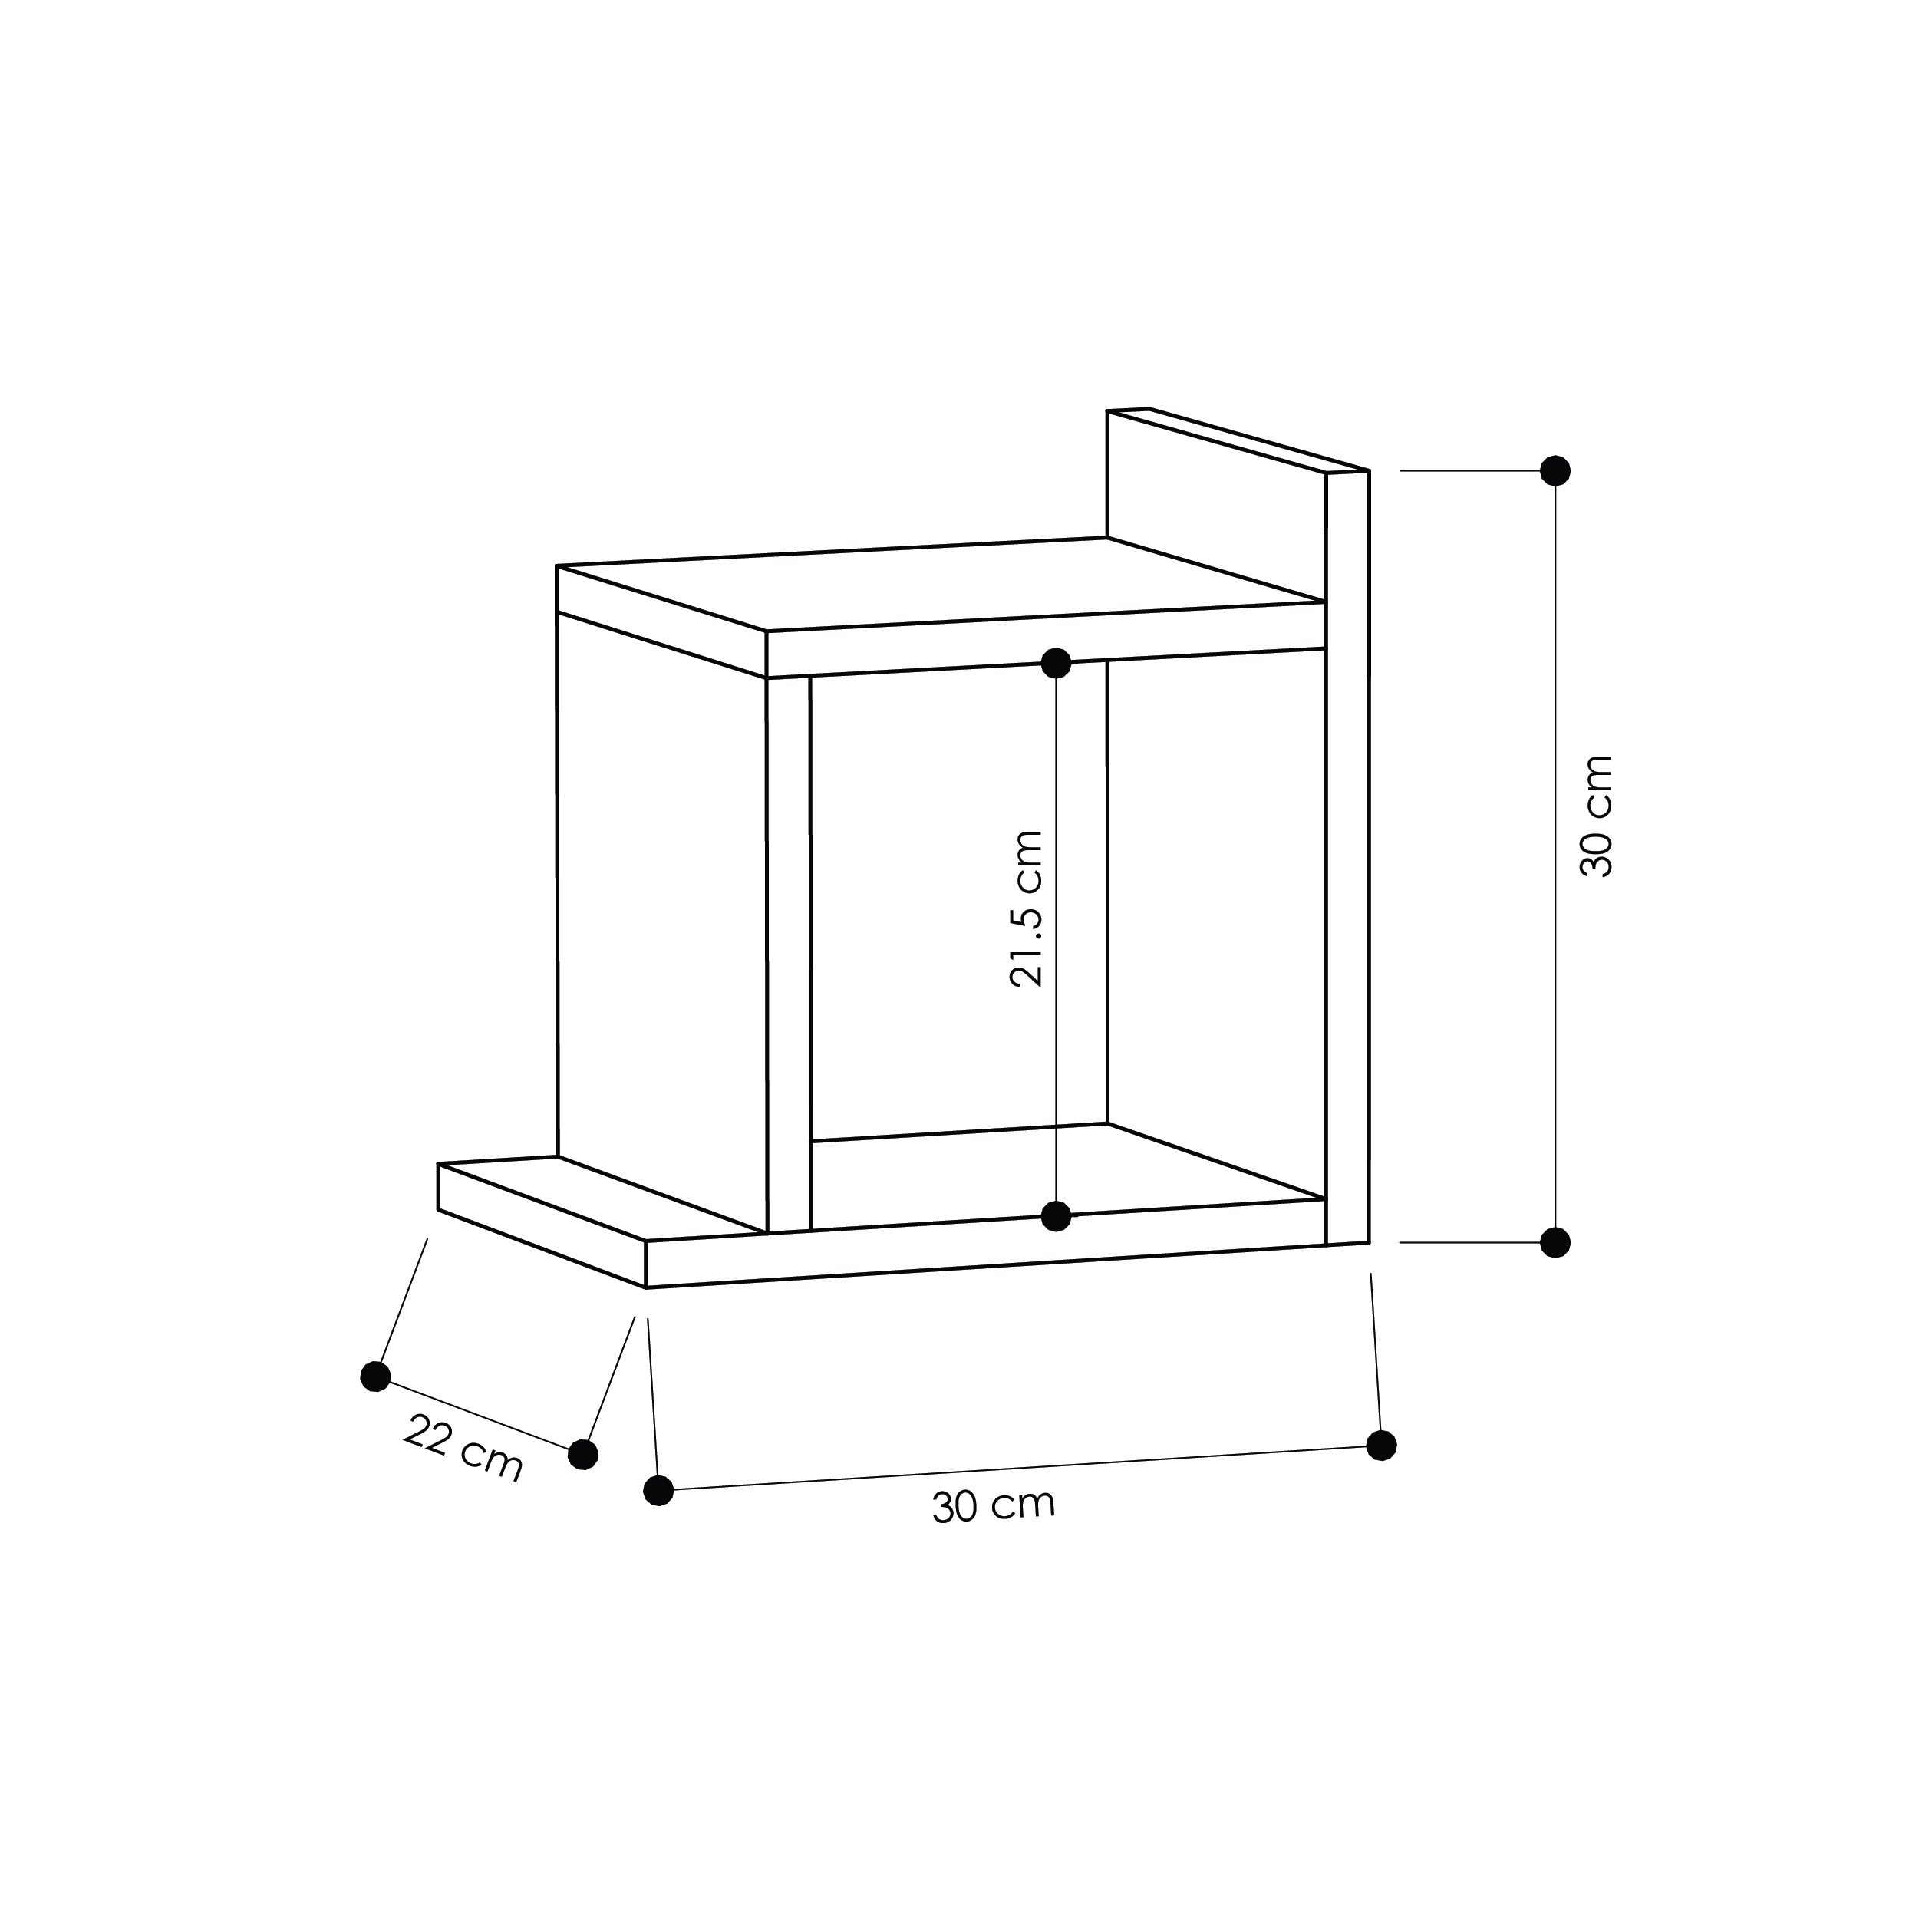 Box Modern Floating Shelf 30cm - DecortieBox Modern Floating Shelf 30cm